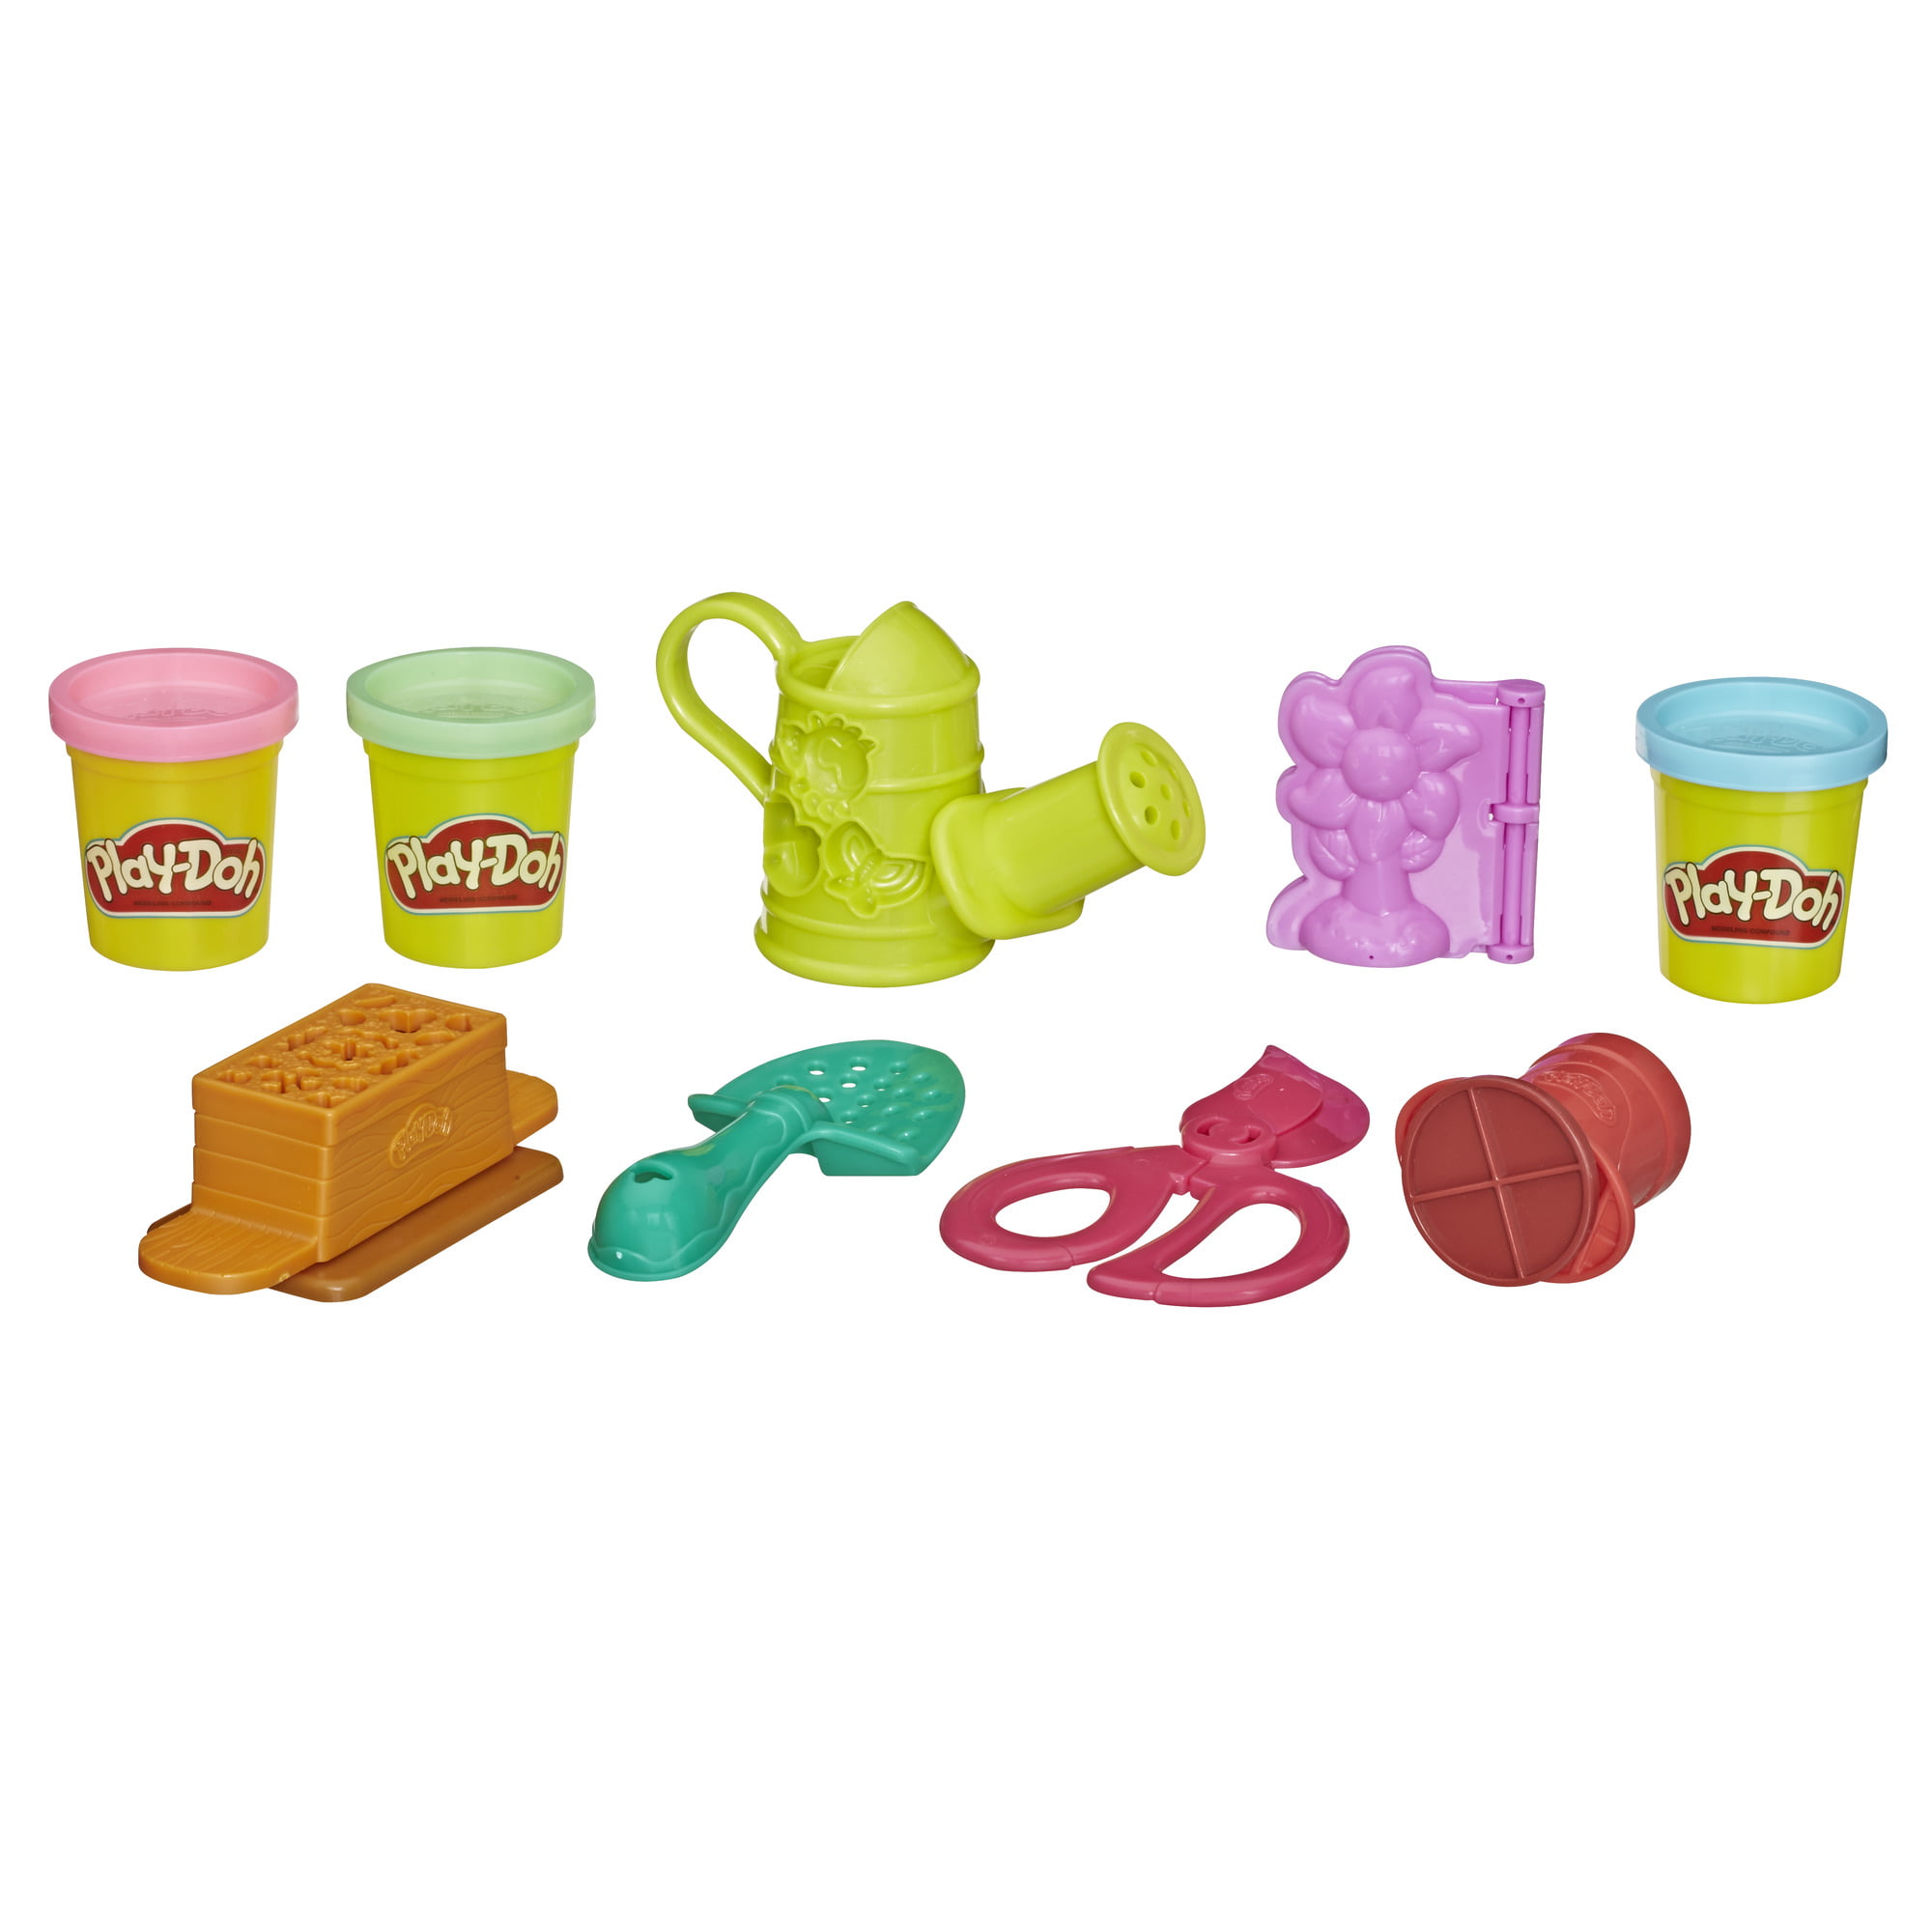 Play-Doh Growin Garden Toy Gardening Tools Set for Kids with 3 Non-Toxic Colors Hasbro E3564AS00